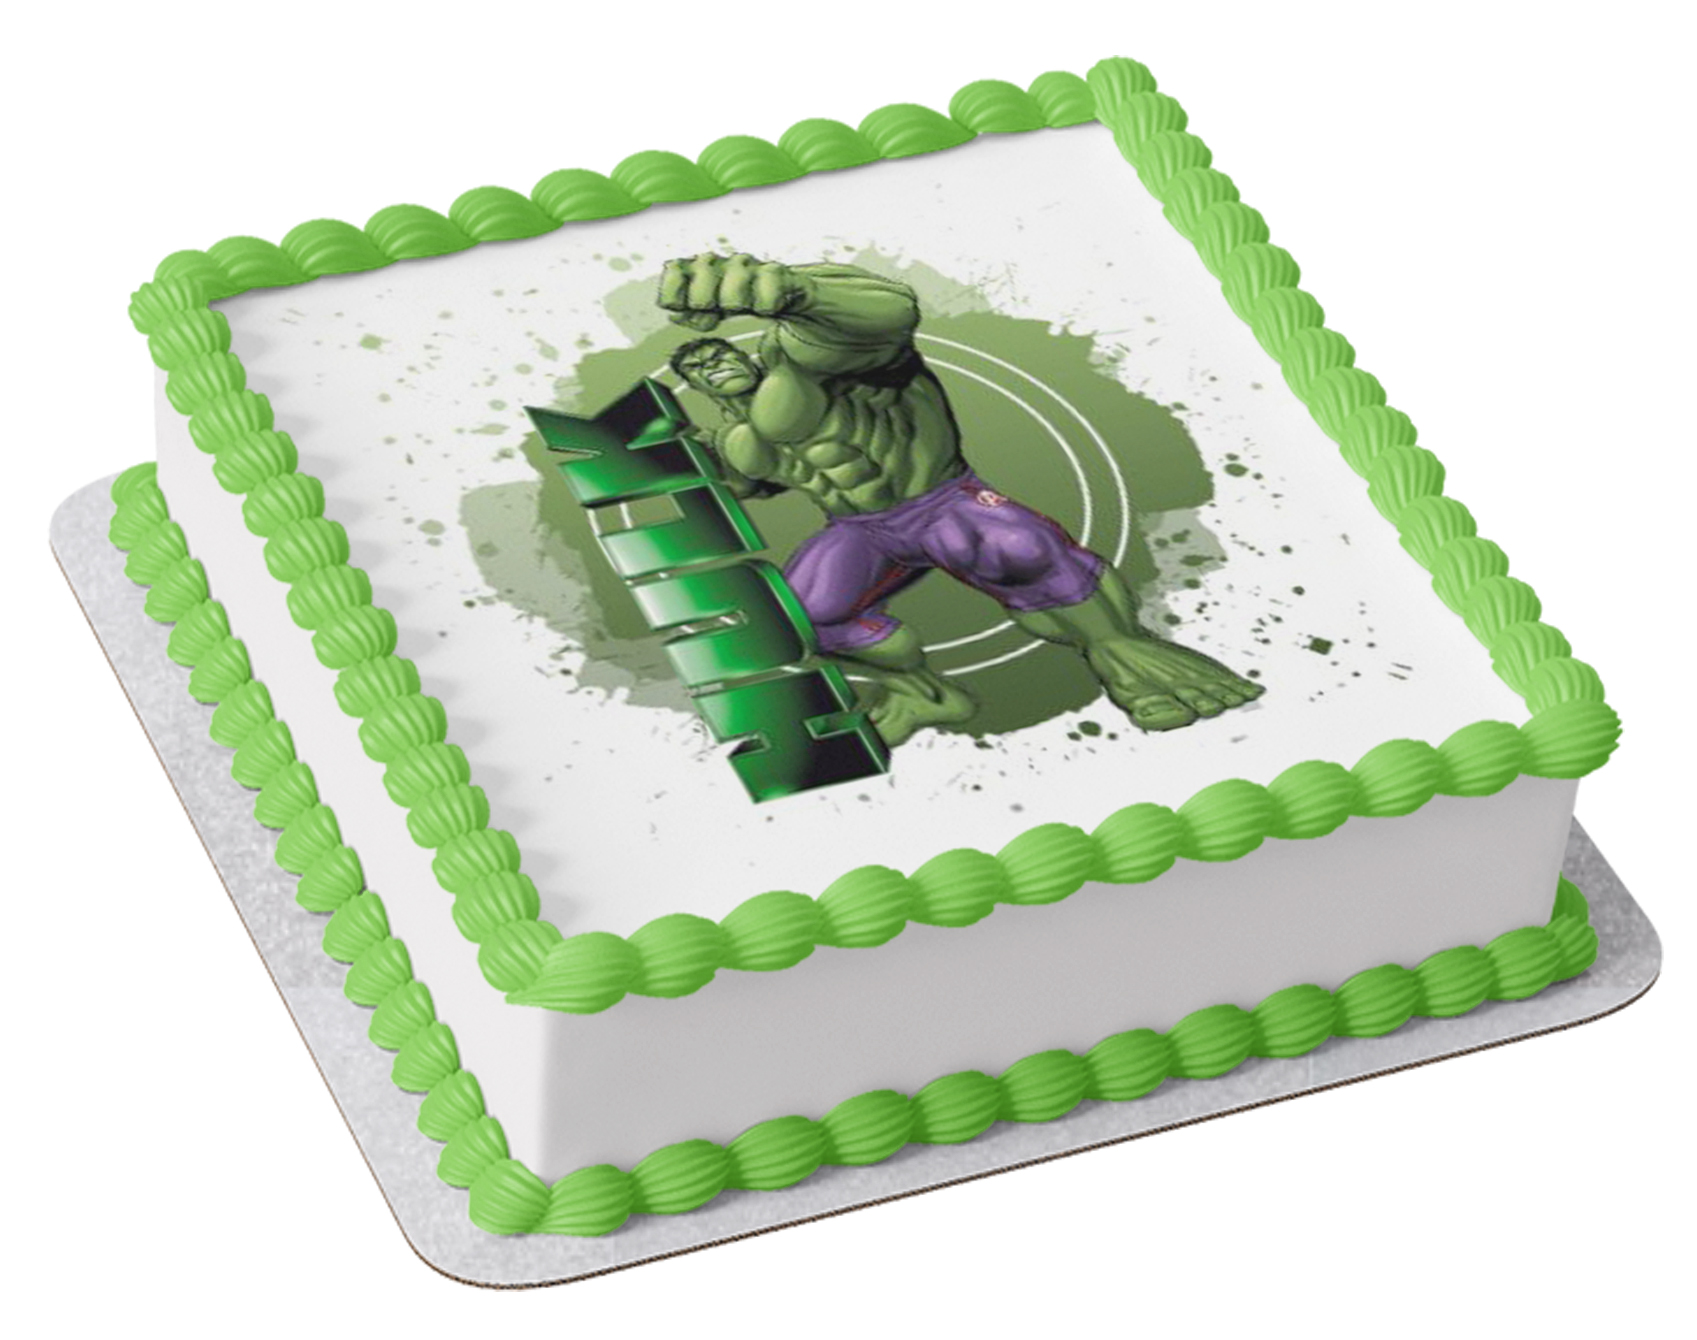 The Incredible Hulk Cake